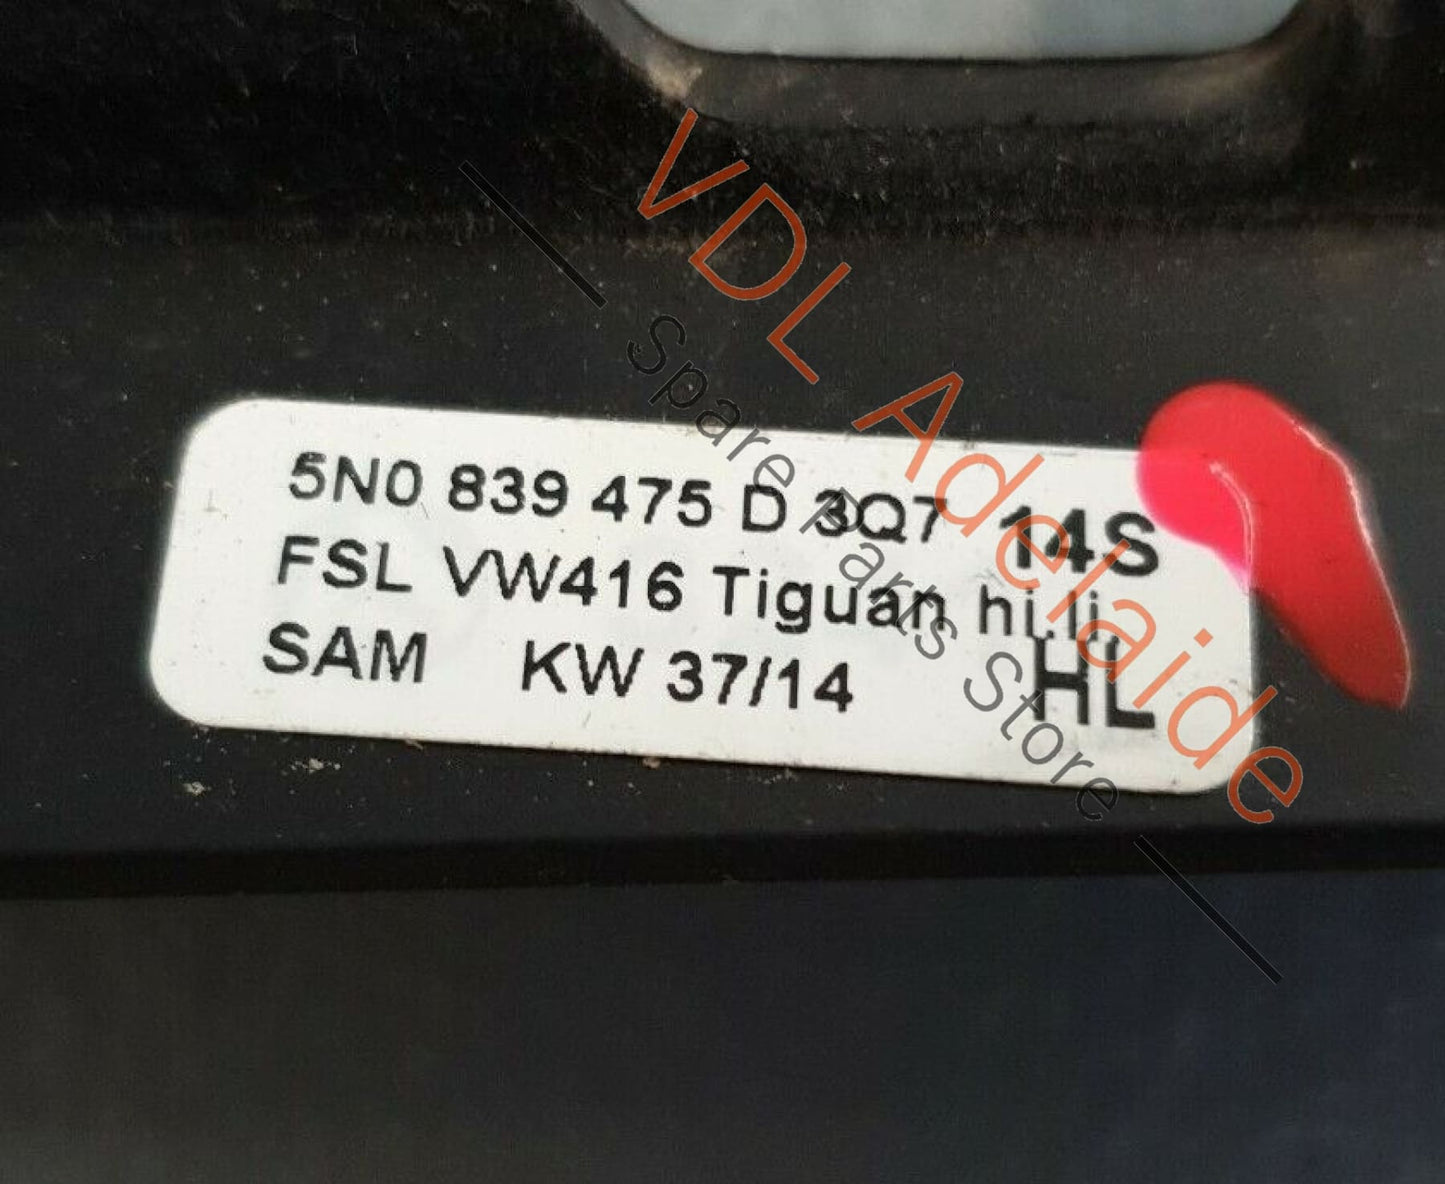 VW Tiguan R 5N Left Rear Window Door Chrome Trim Molding Weather Strip Seal JES 5N0839475D3Q7